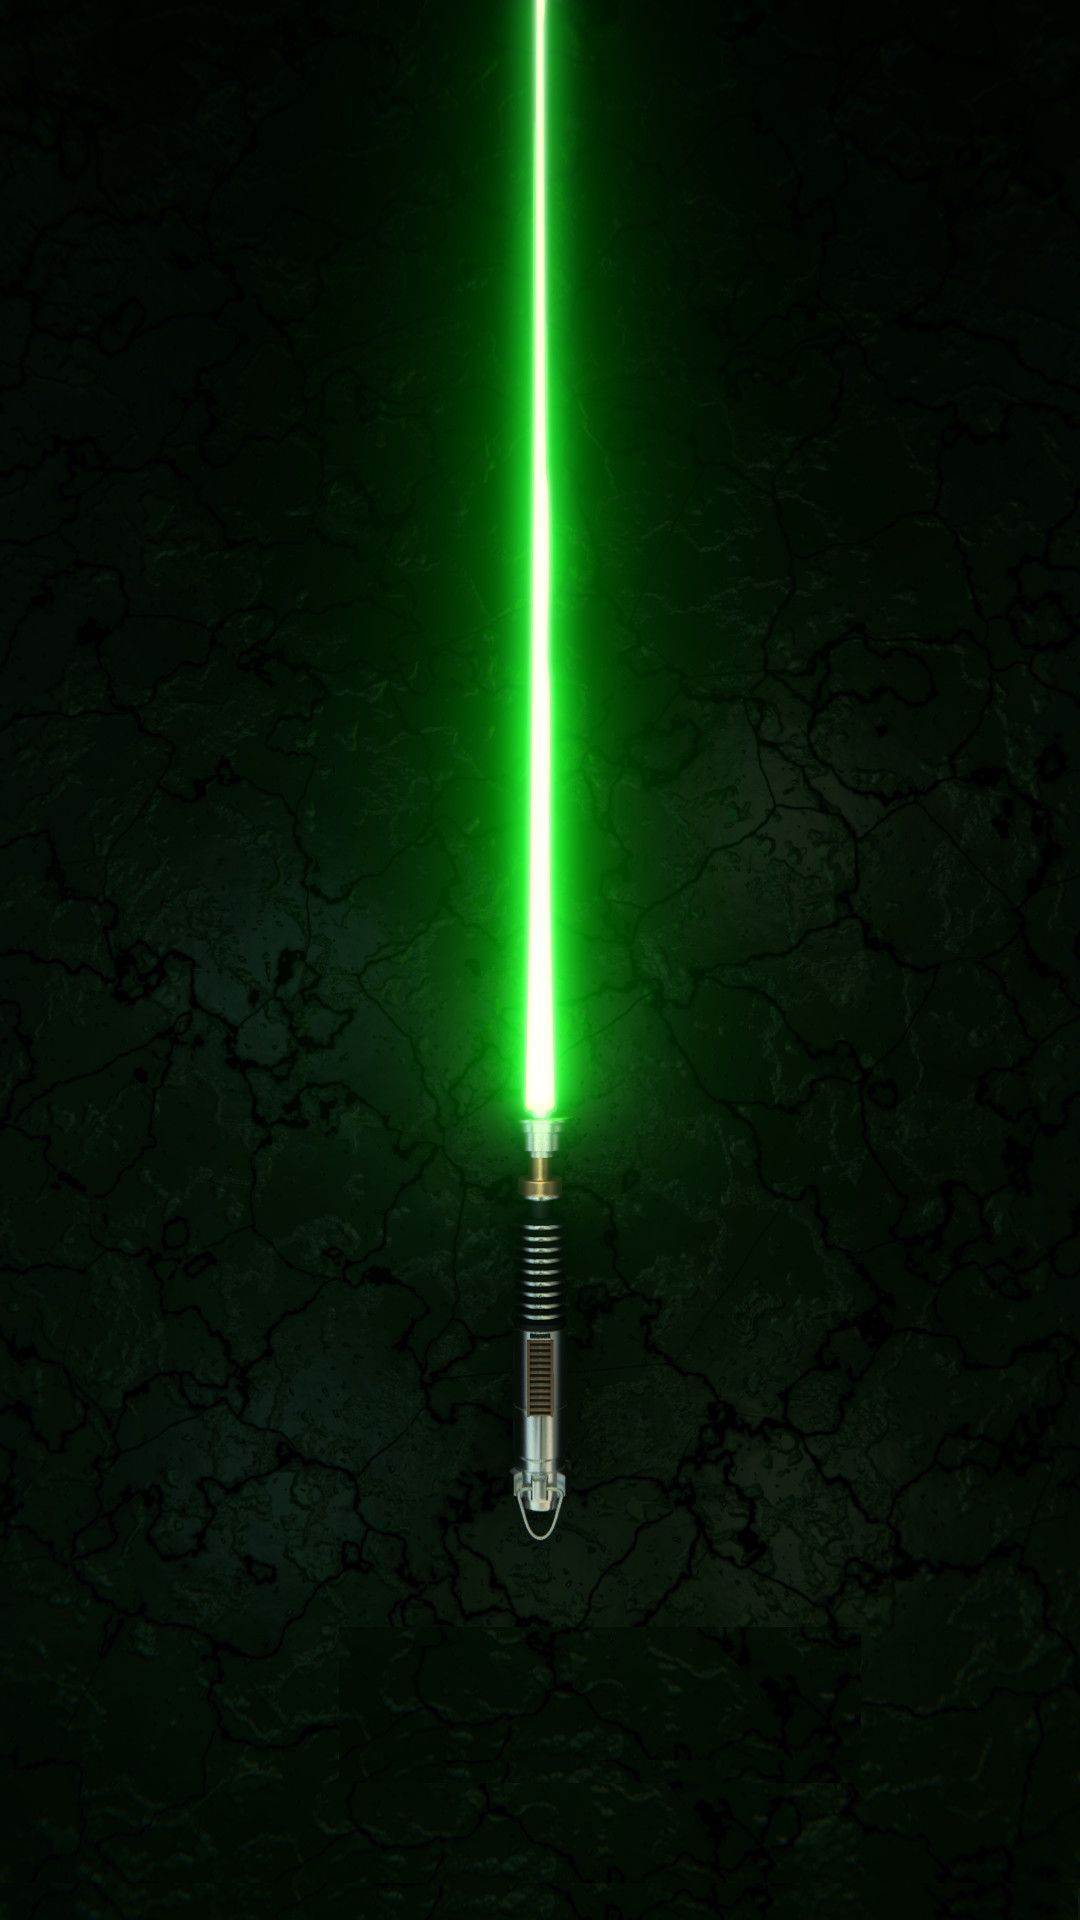 Star wars wallpaper, Star wars light saber, Star wars picture